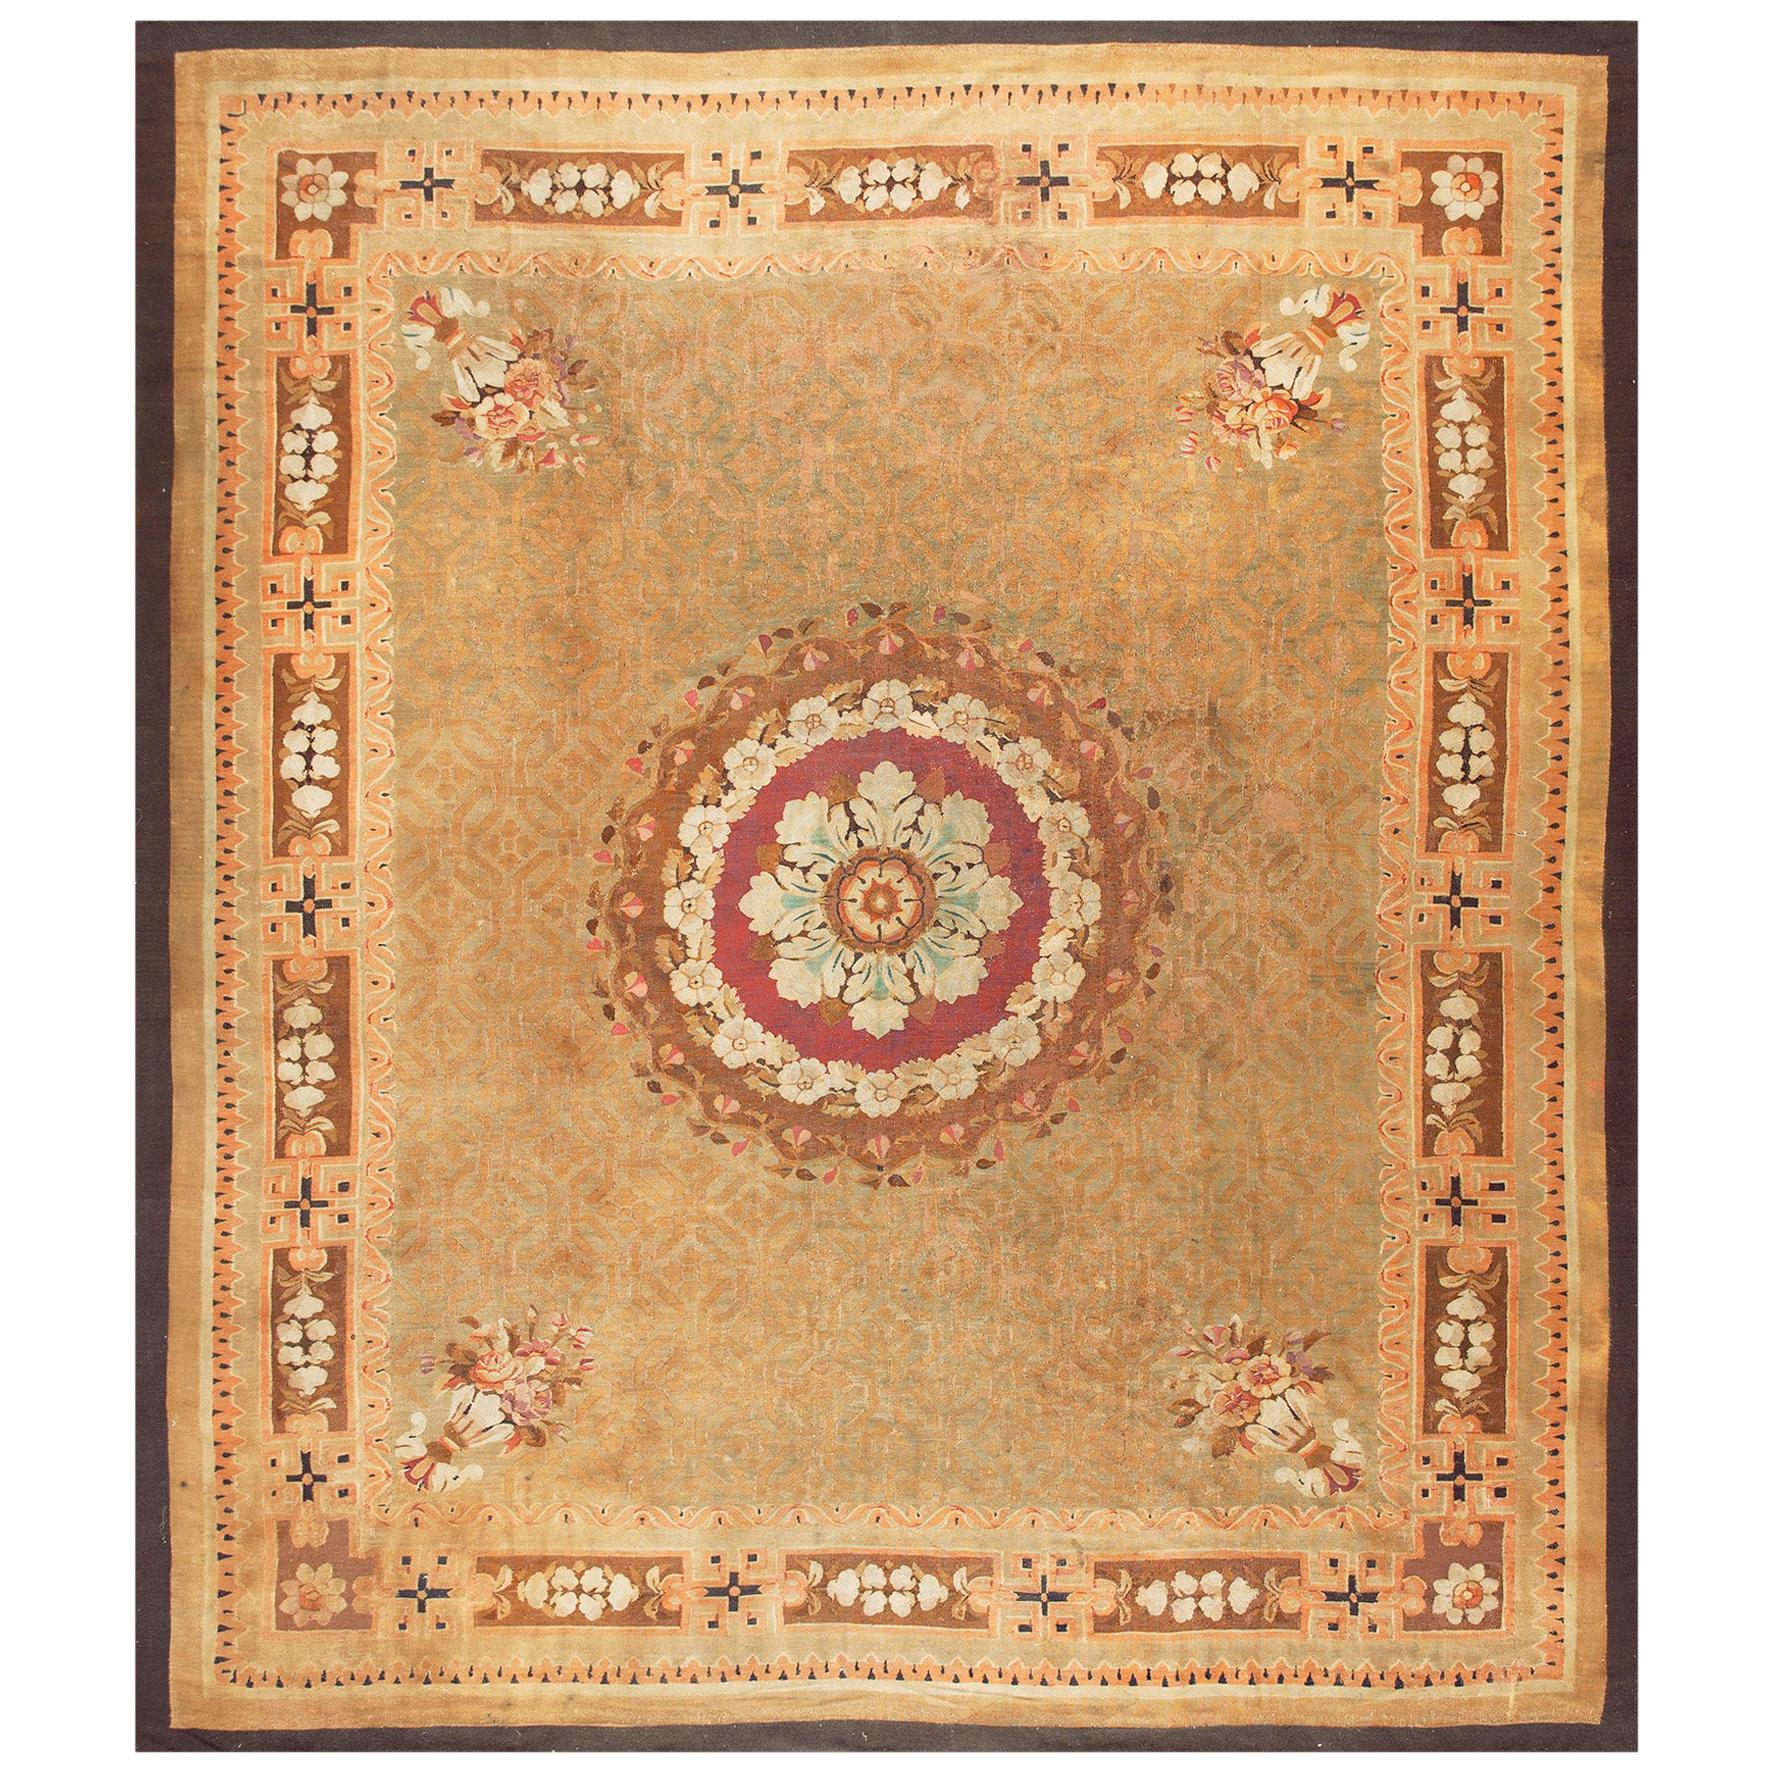 Antique French Aubusson Carpet - 1st Empire Period For Sale